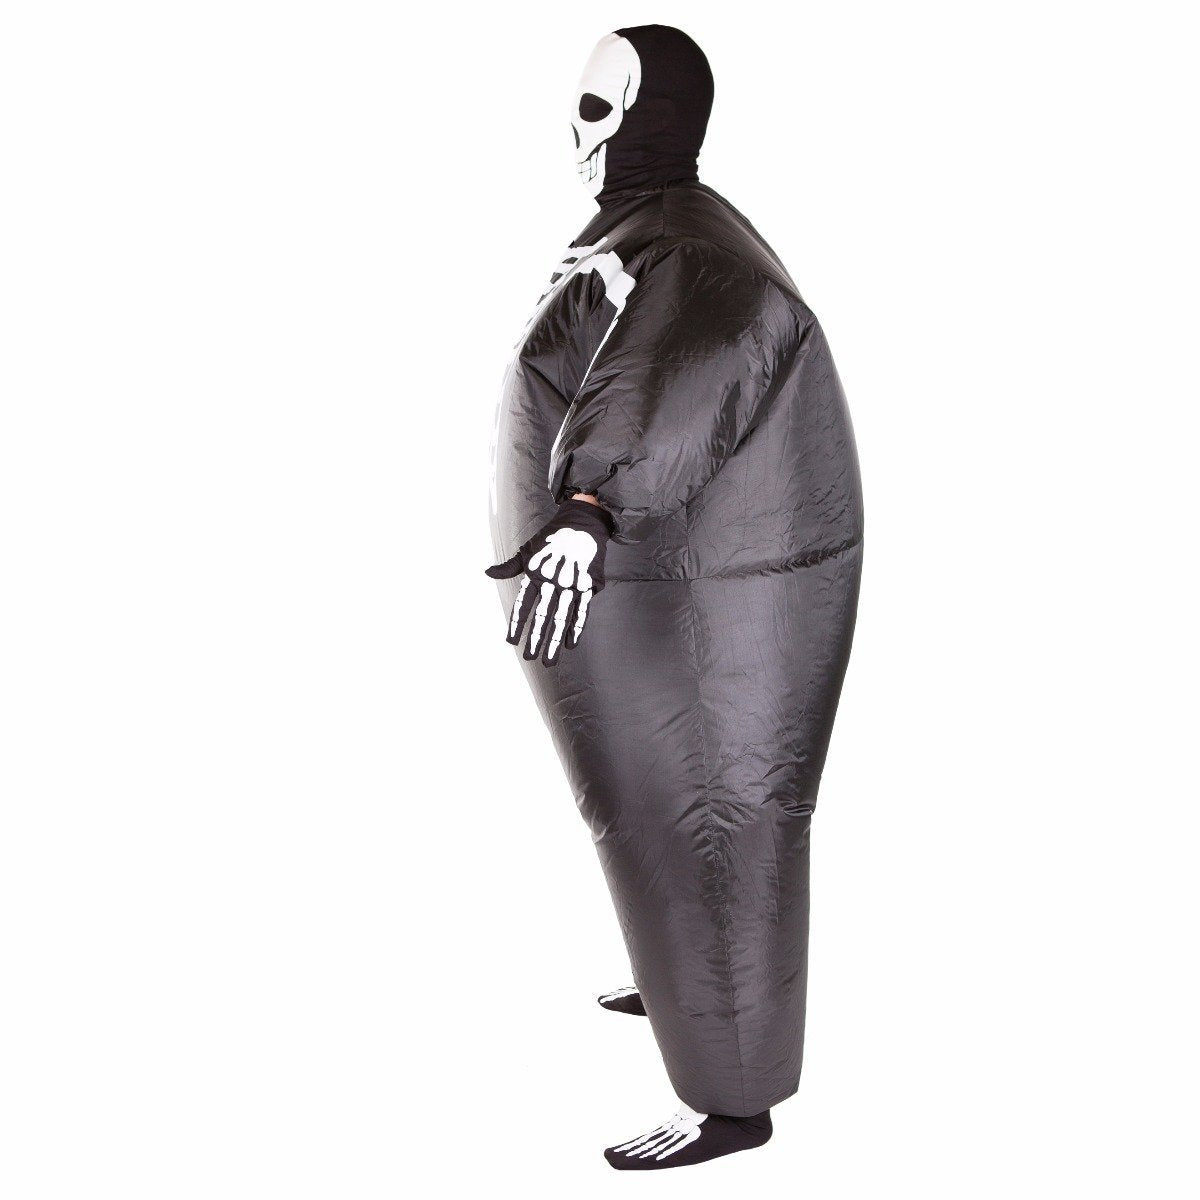 Bodysocks - Inflatable Skeleton Costume